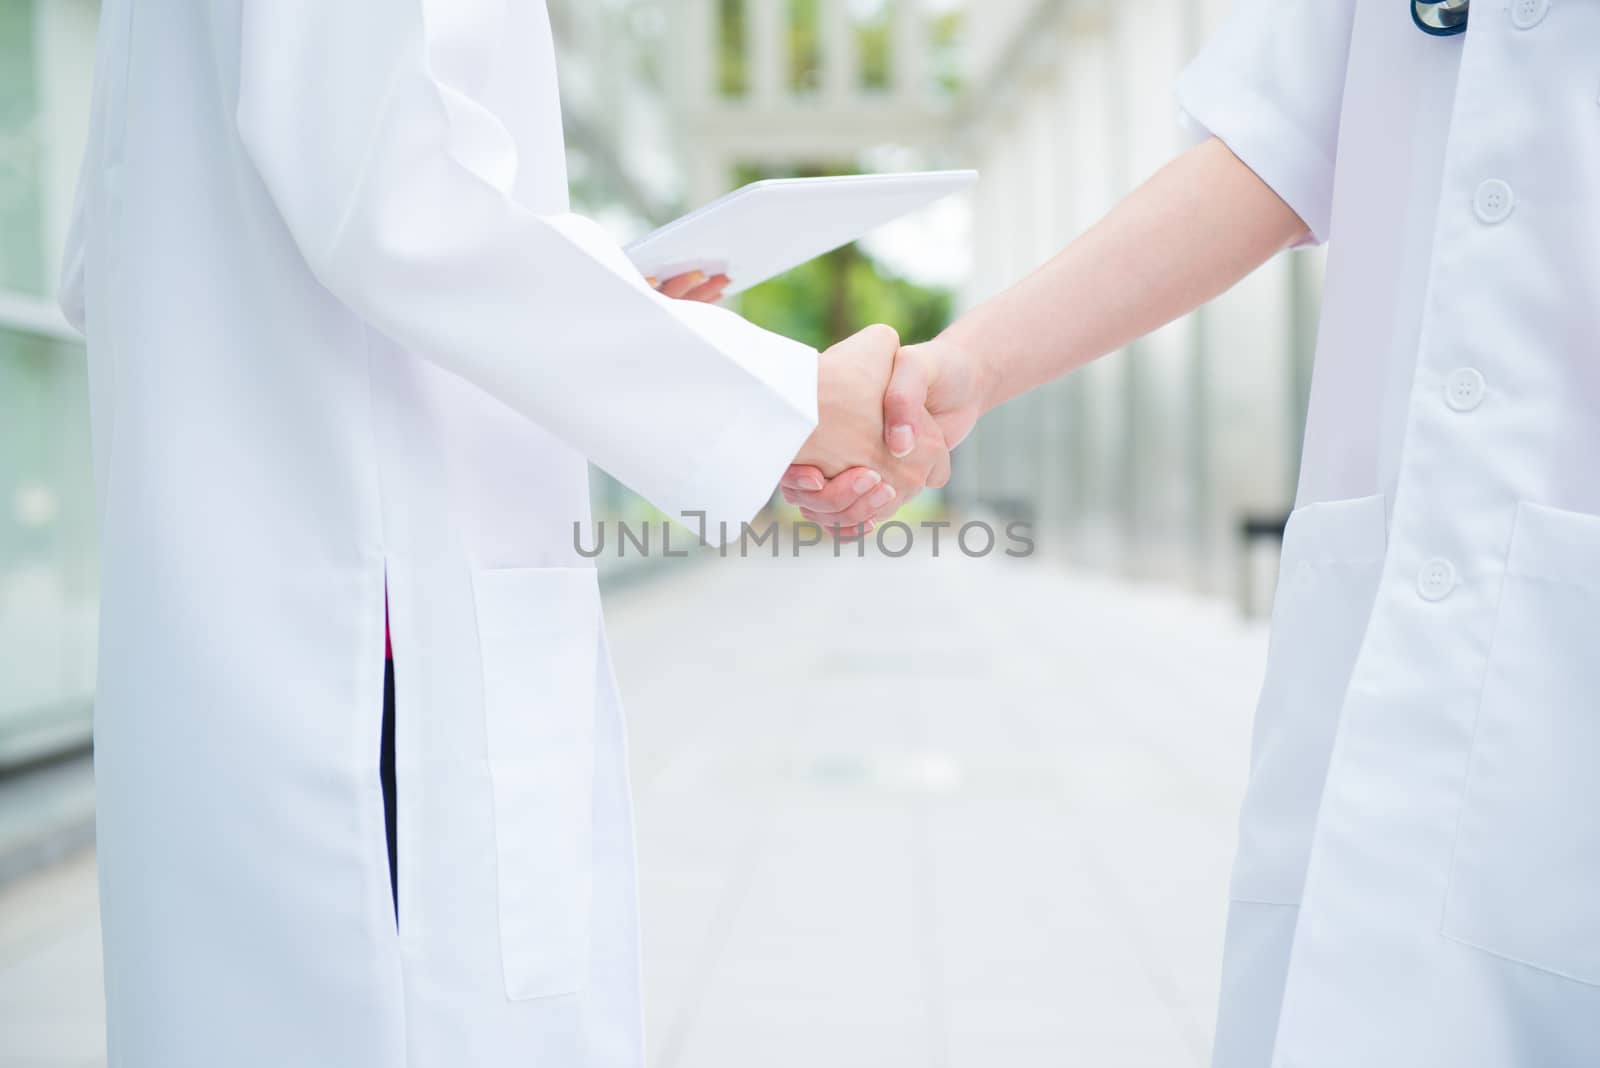 Two medical doctors shaking hands at hospital corridor, teamwork concept.